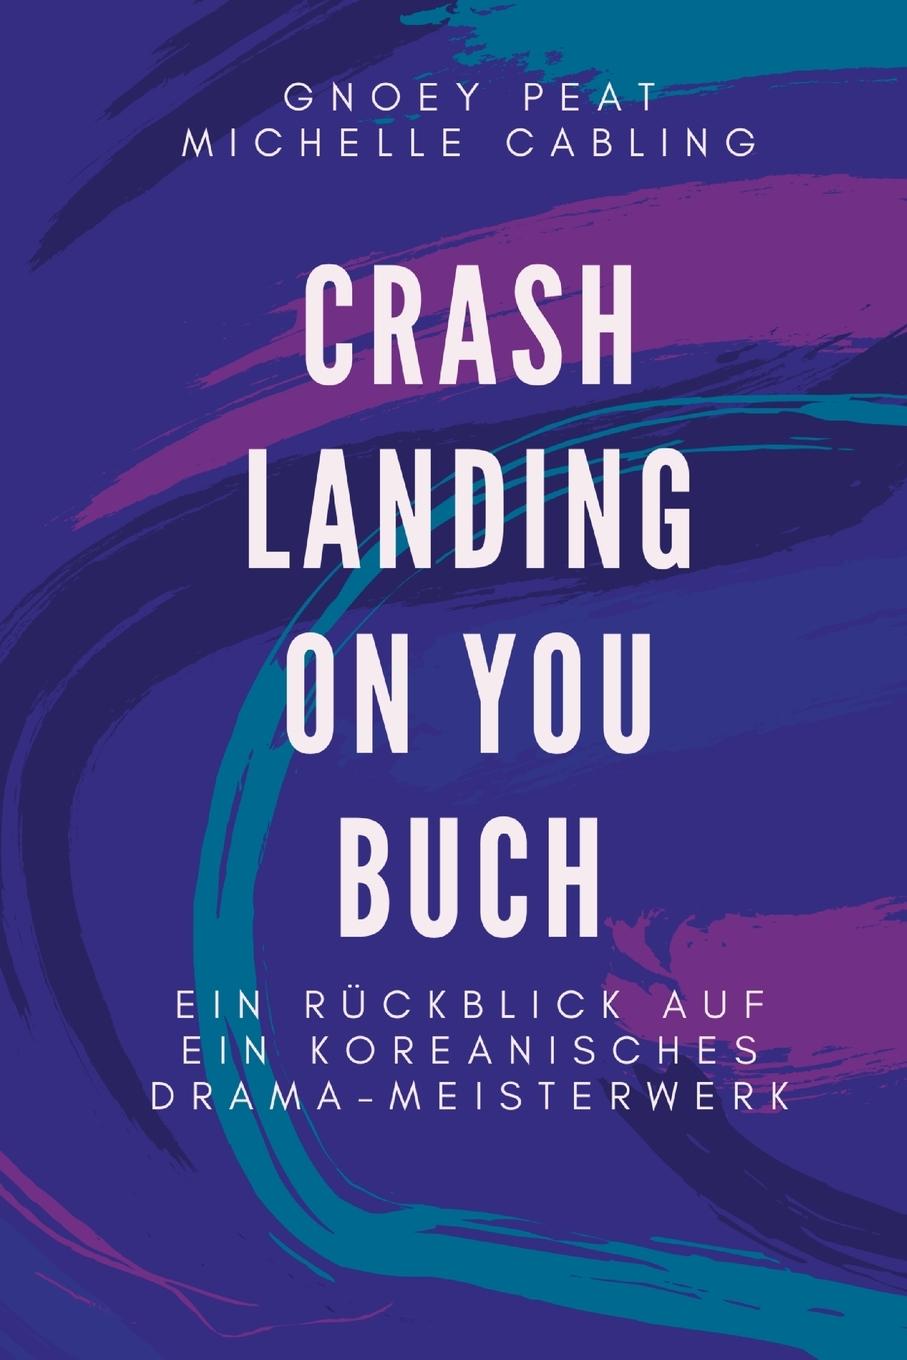 Carte Crash Landing On You Buch Gnoey Peat